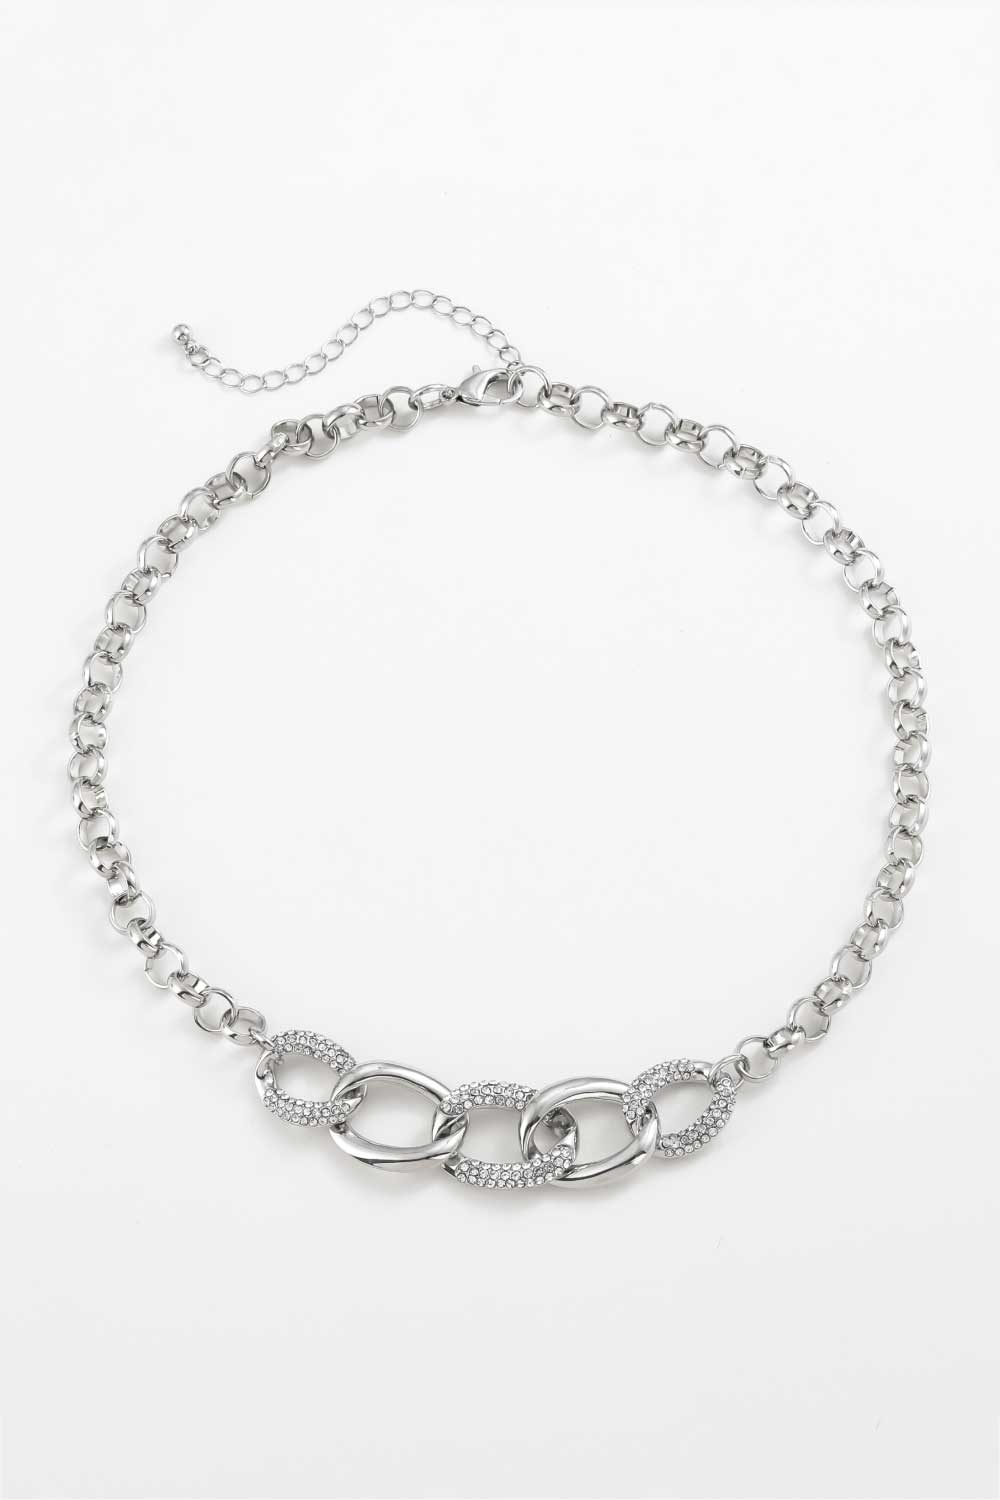 Rhinestone Chunky Chain Choker Necklace